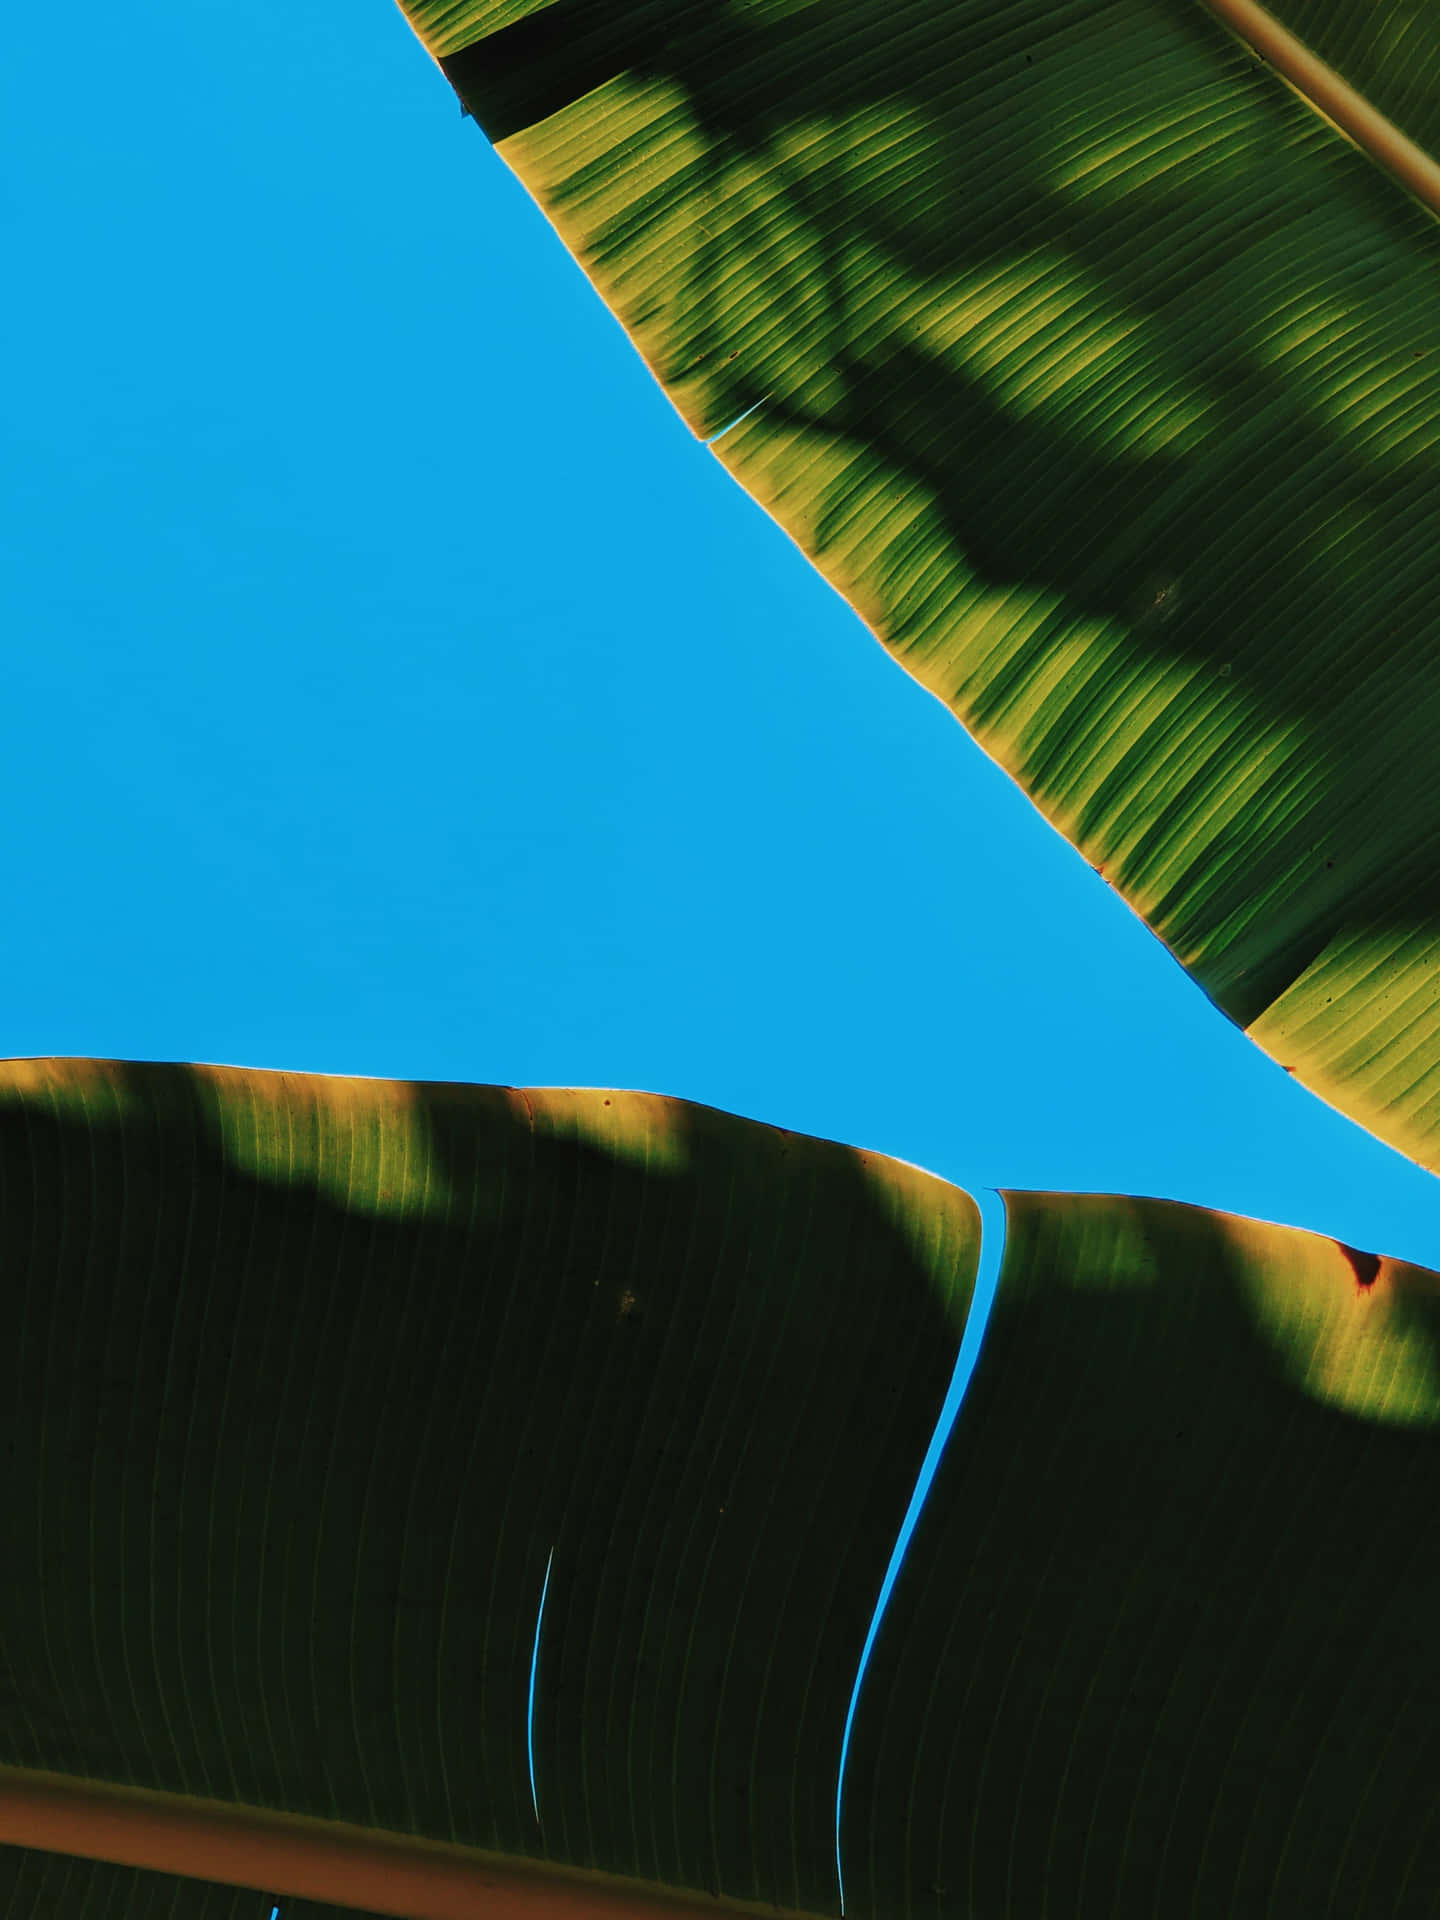 ○  Enjoy a Tropical Feeling with Banana Leaf Background